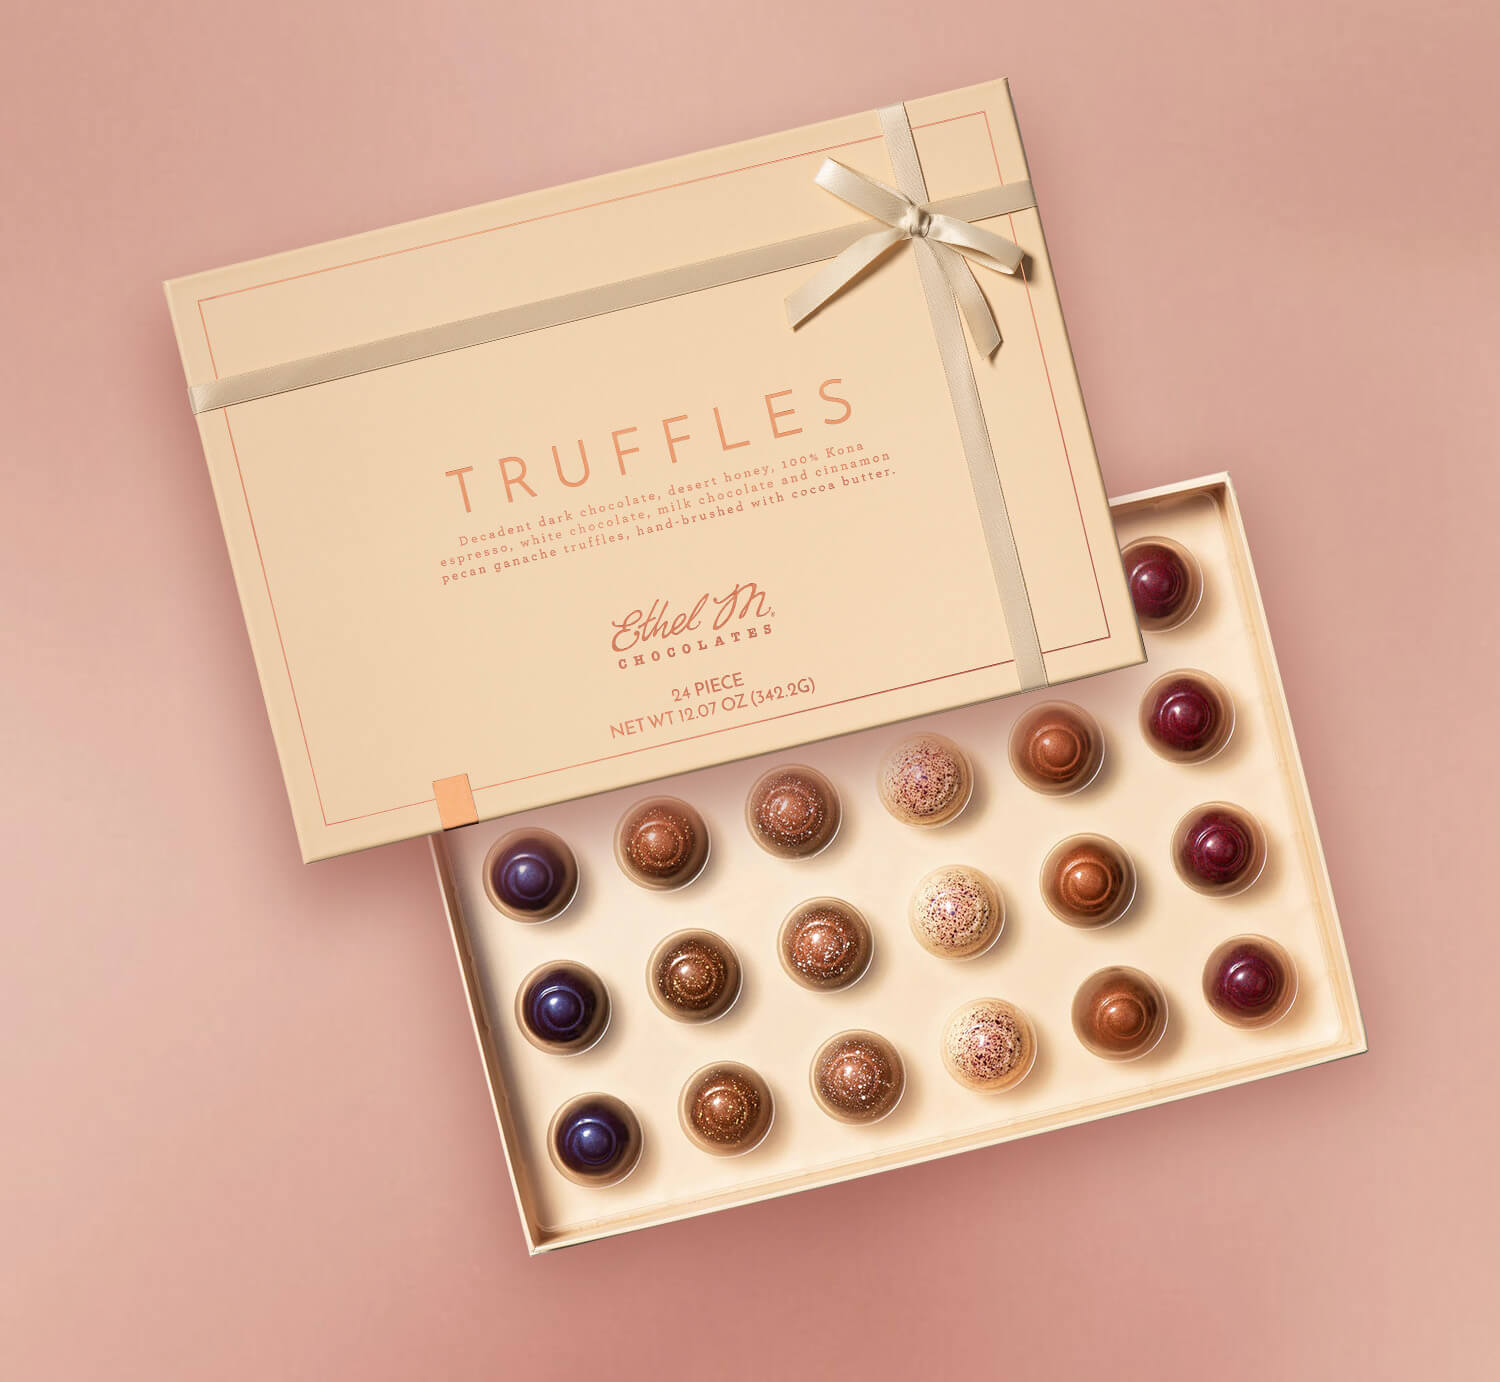 Ethel M Chocolates box of truffles on a pink background